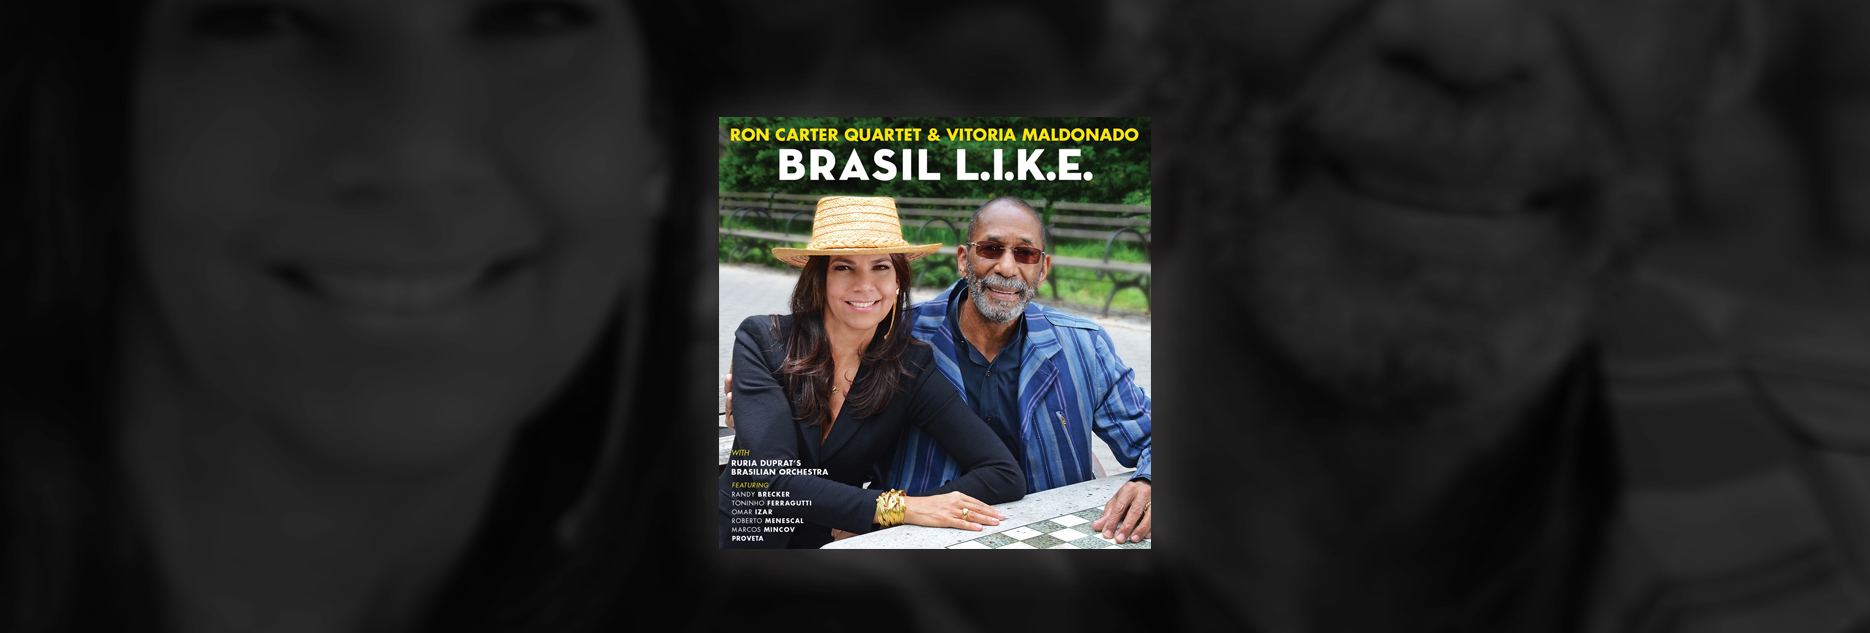 Vitoria Maldonado e Ron Carter unem jazz e bossa em “Brasil L.I.K.E.”